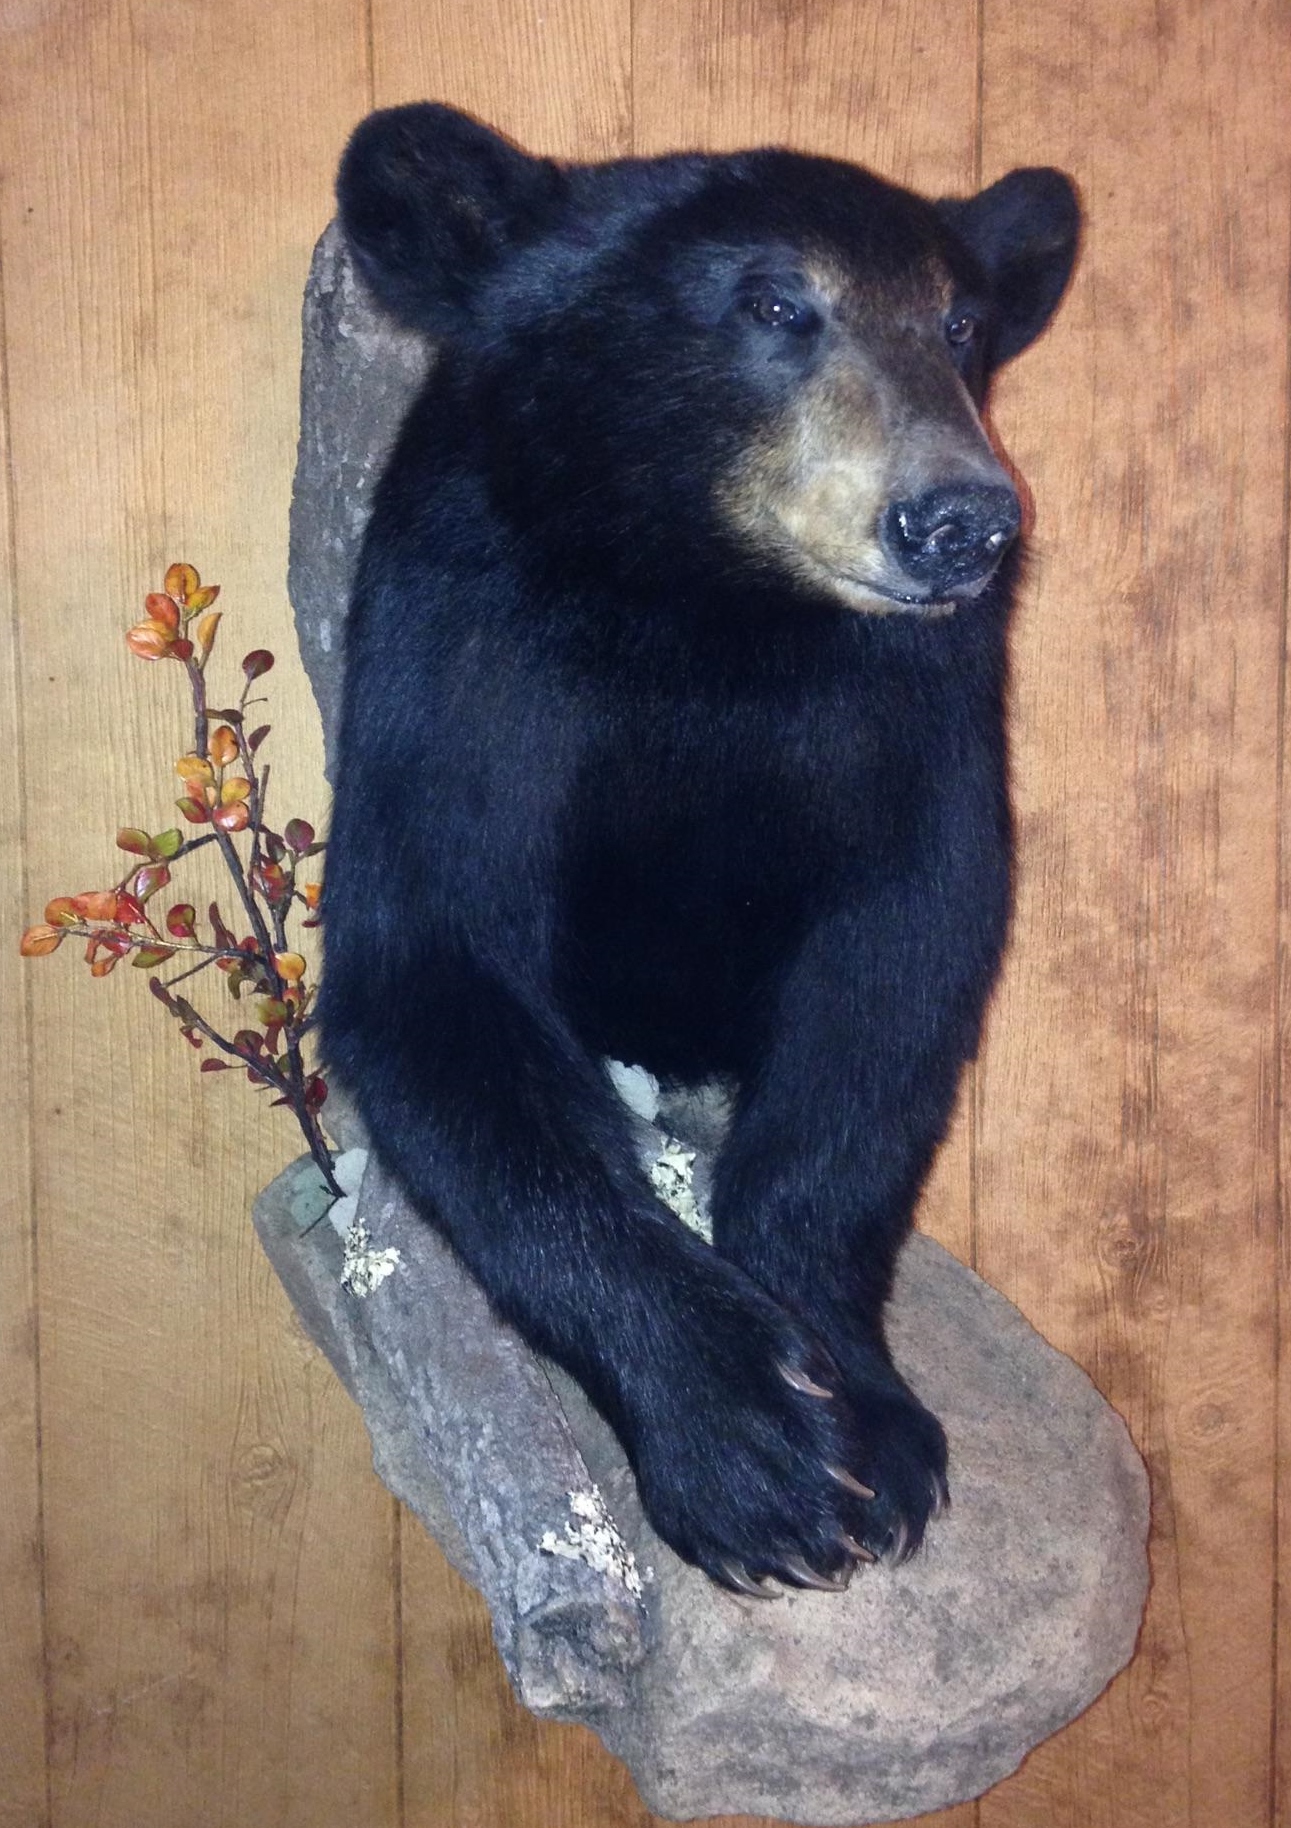 Black bear with habitat